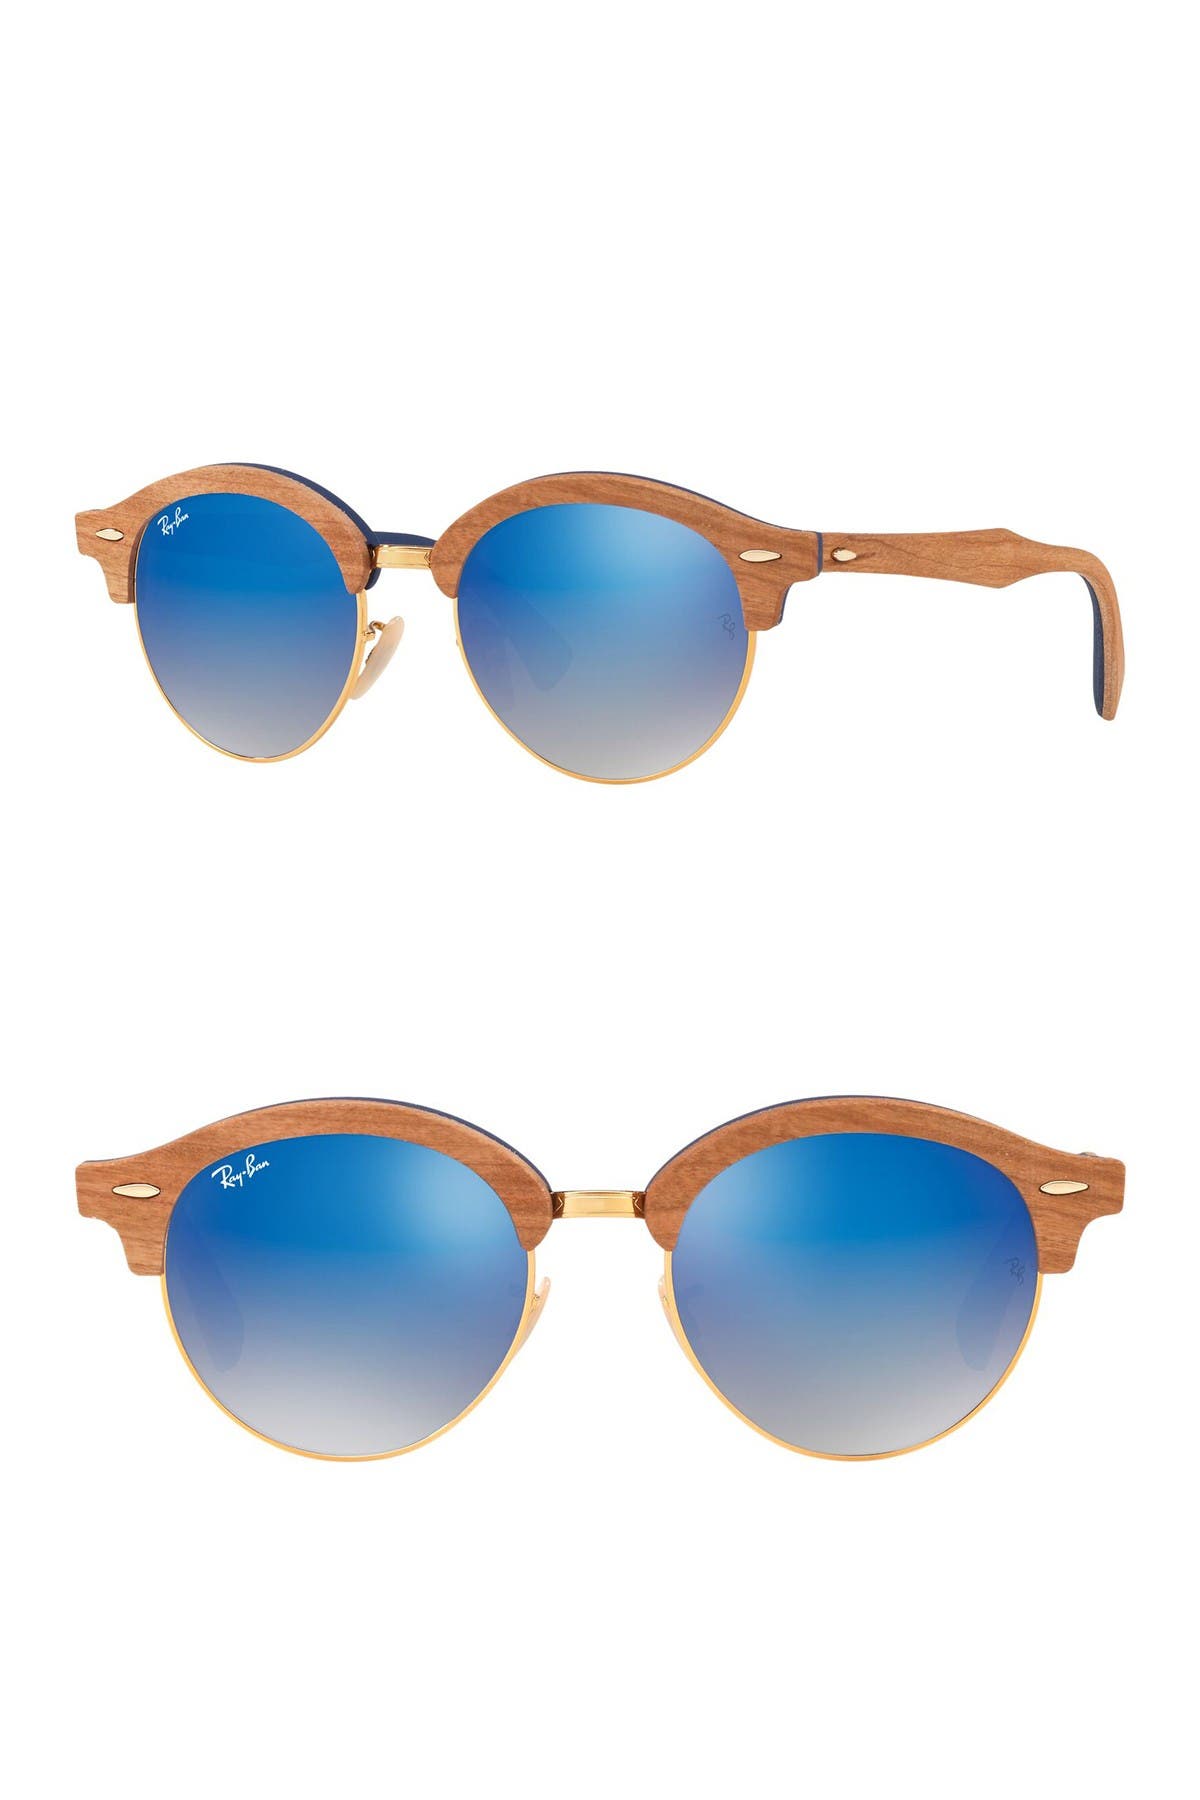 Ray Ban 51mm Mirrored Round Sunglasses, Blue Mirrored Round Ray Bans